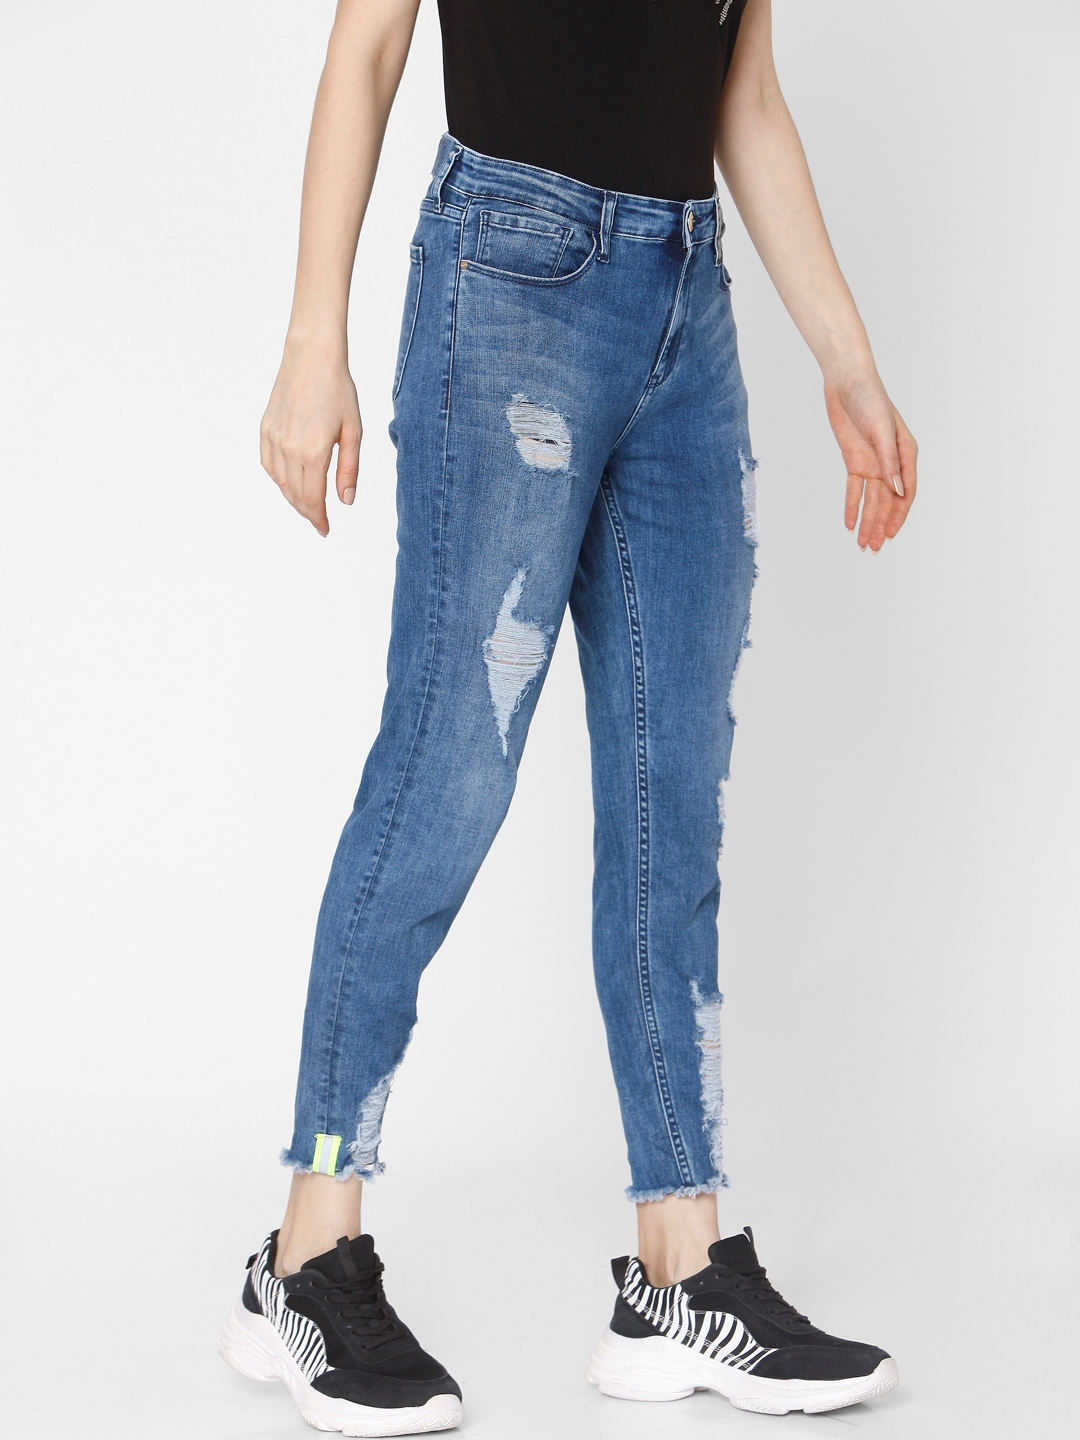 spykar | Women's Blue Cotton Ripped Skinny Jeans 3